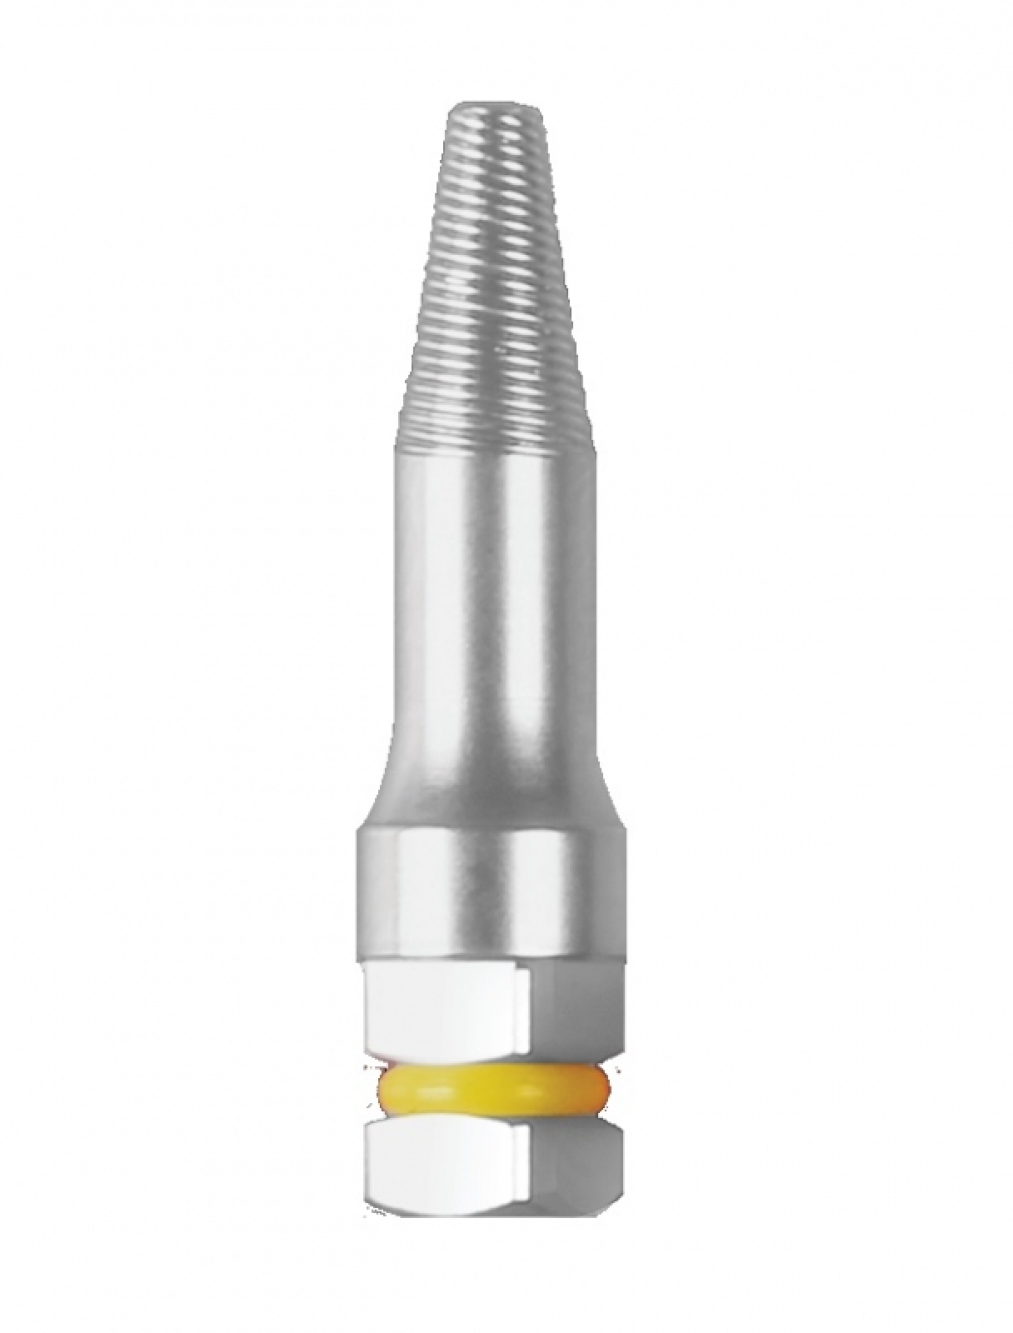 FRD-03 Стоматологический экстрактор имплантата, диаметр 4.0 мм, Mr.Curette Tech, Южная Корея